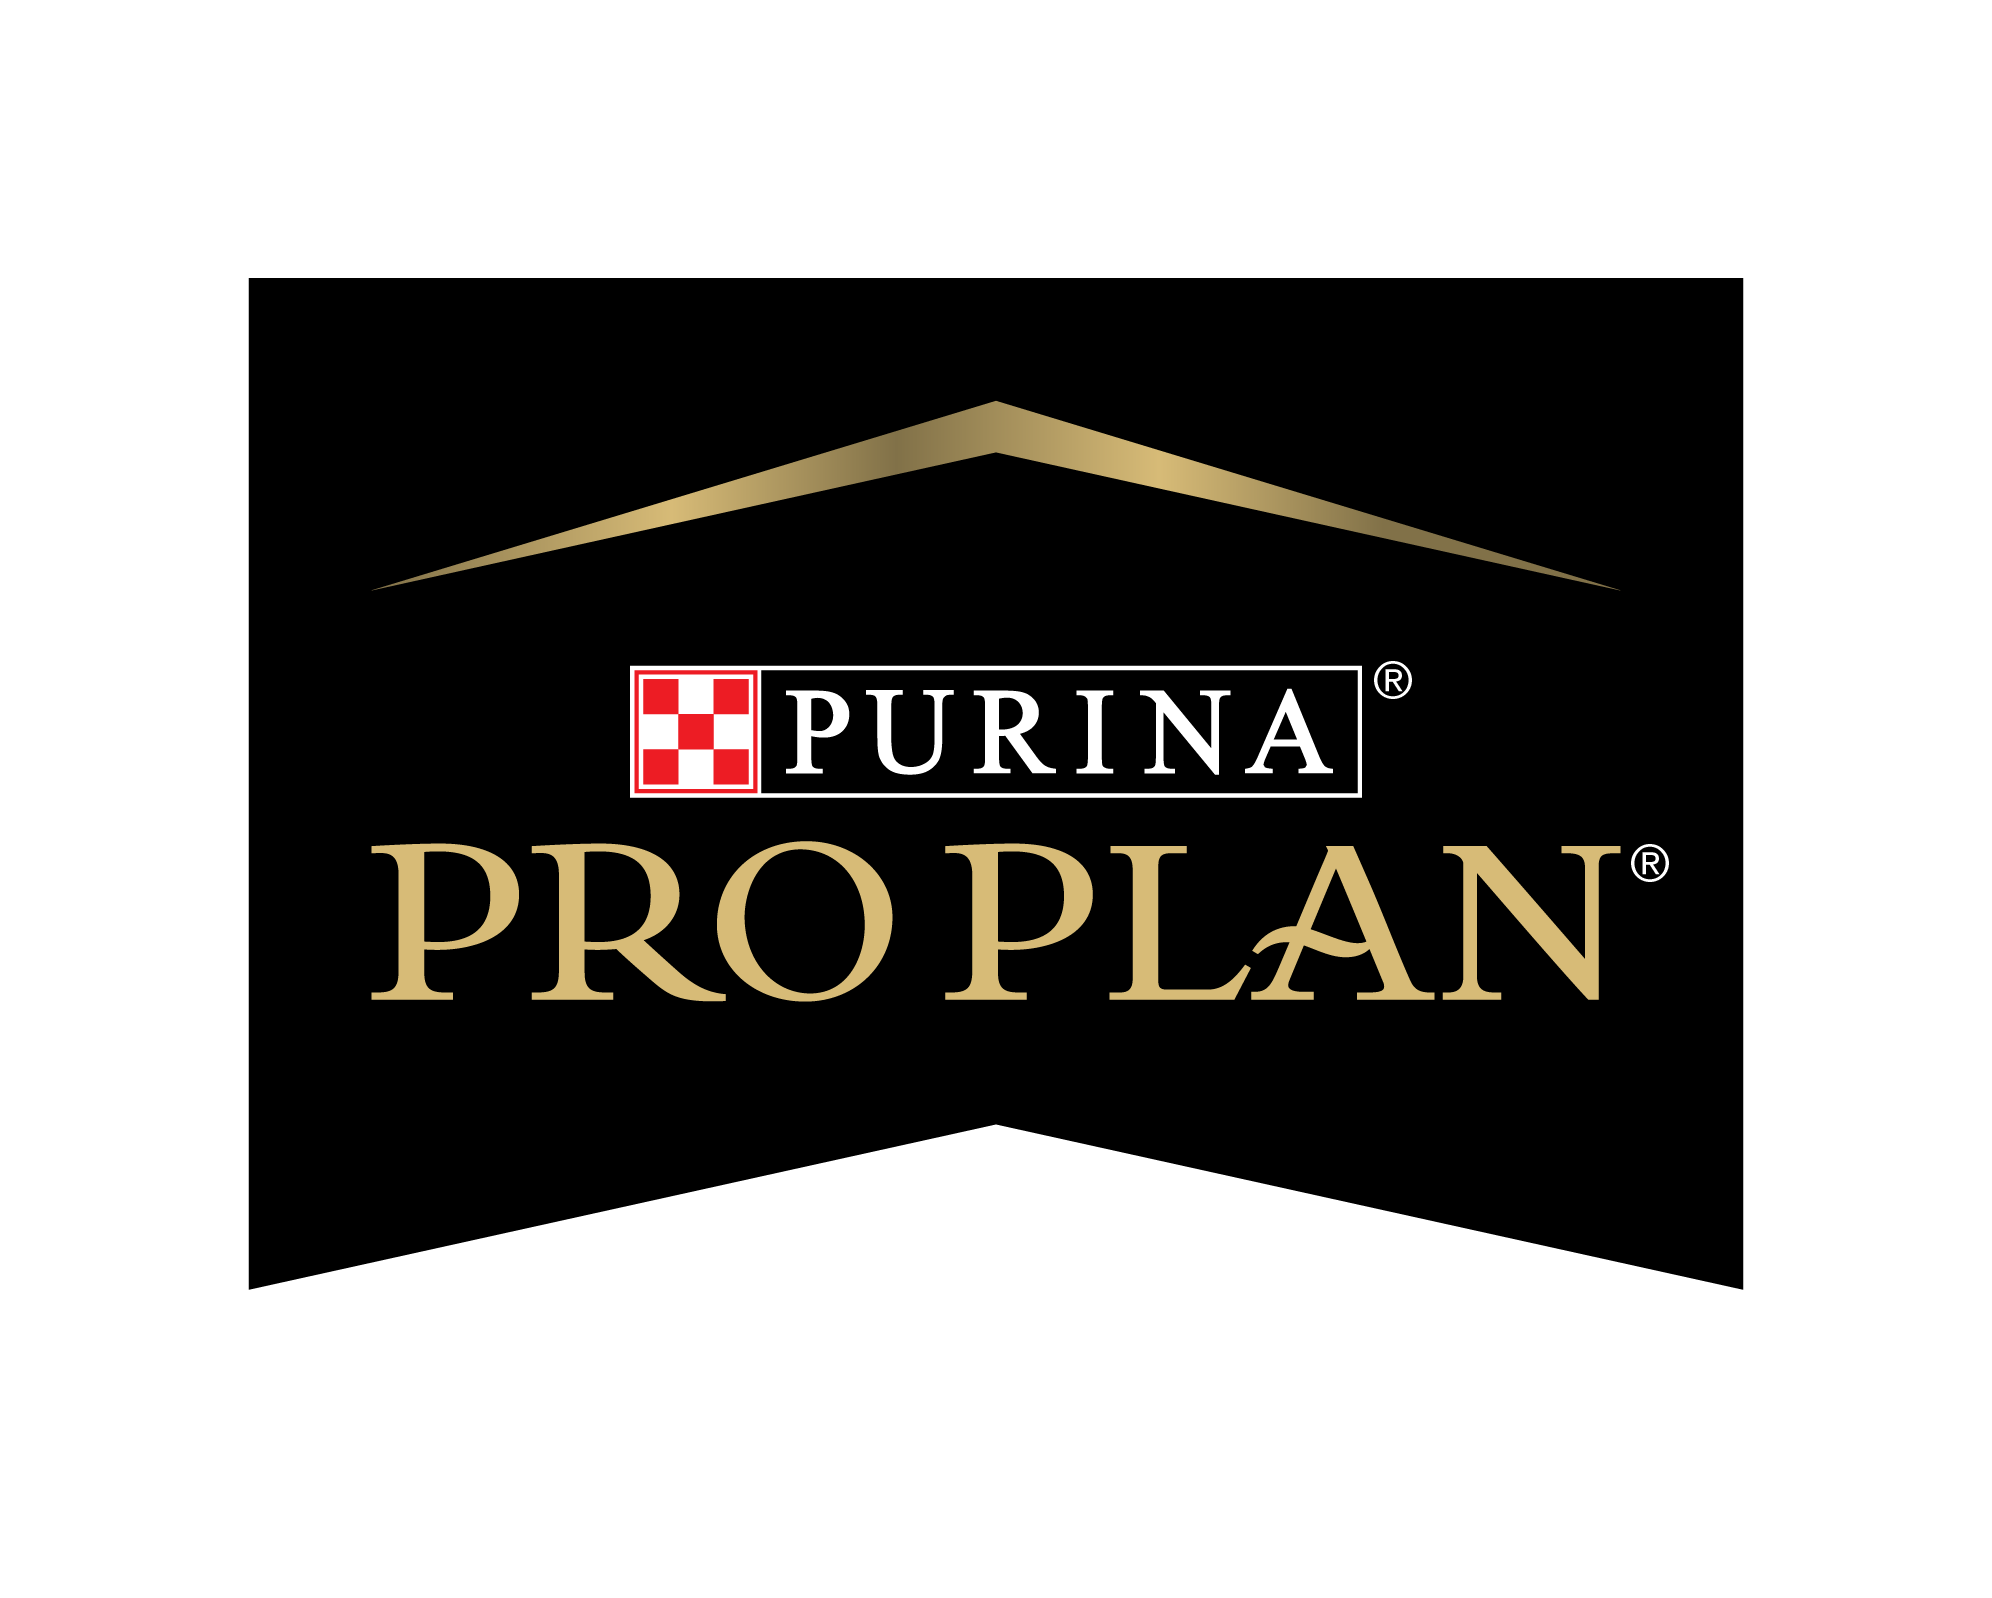 pro plan flag logo